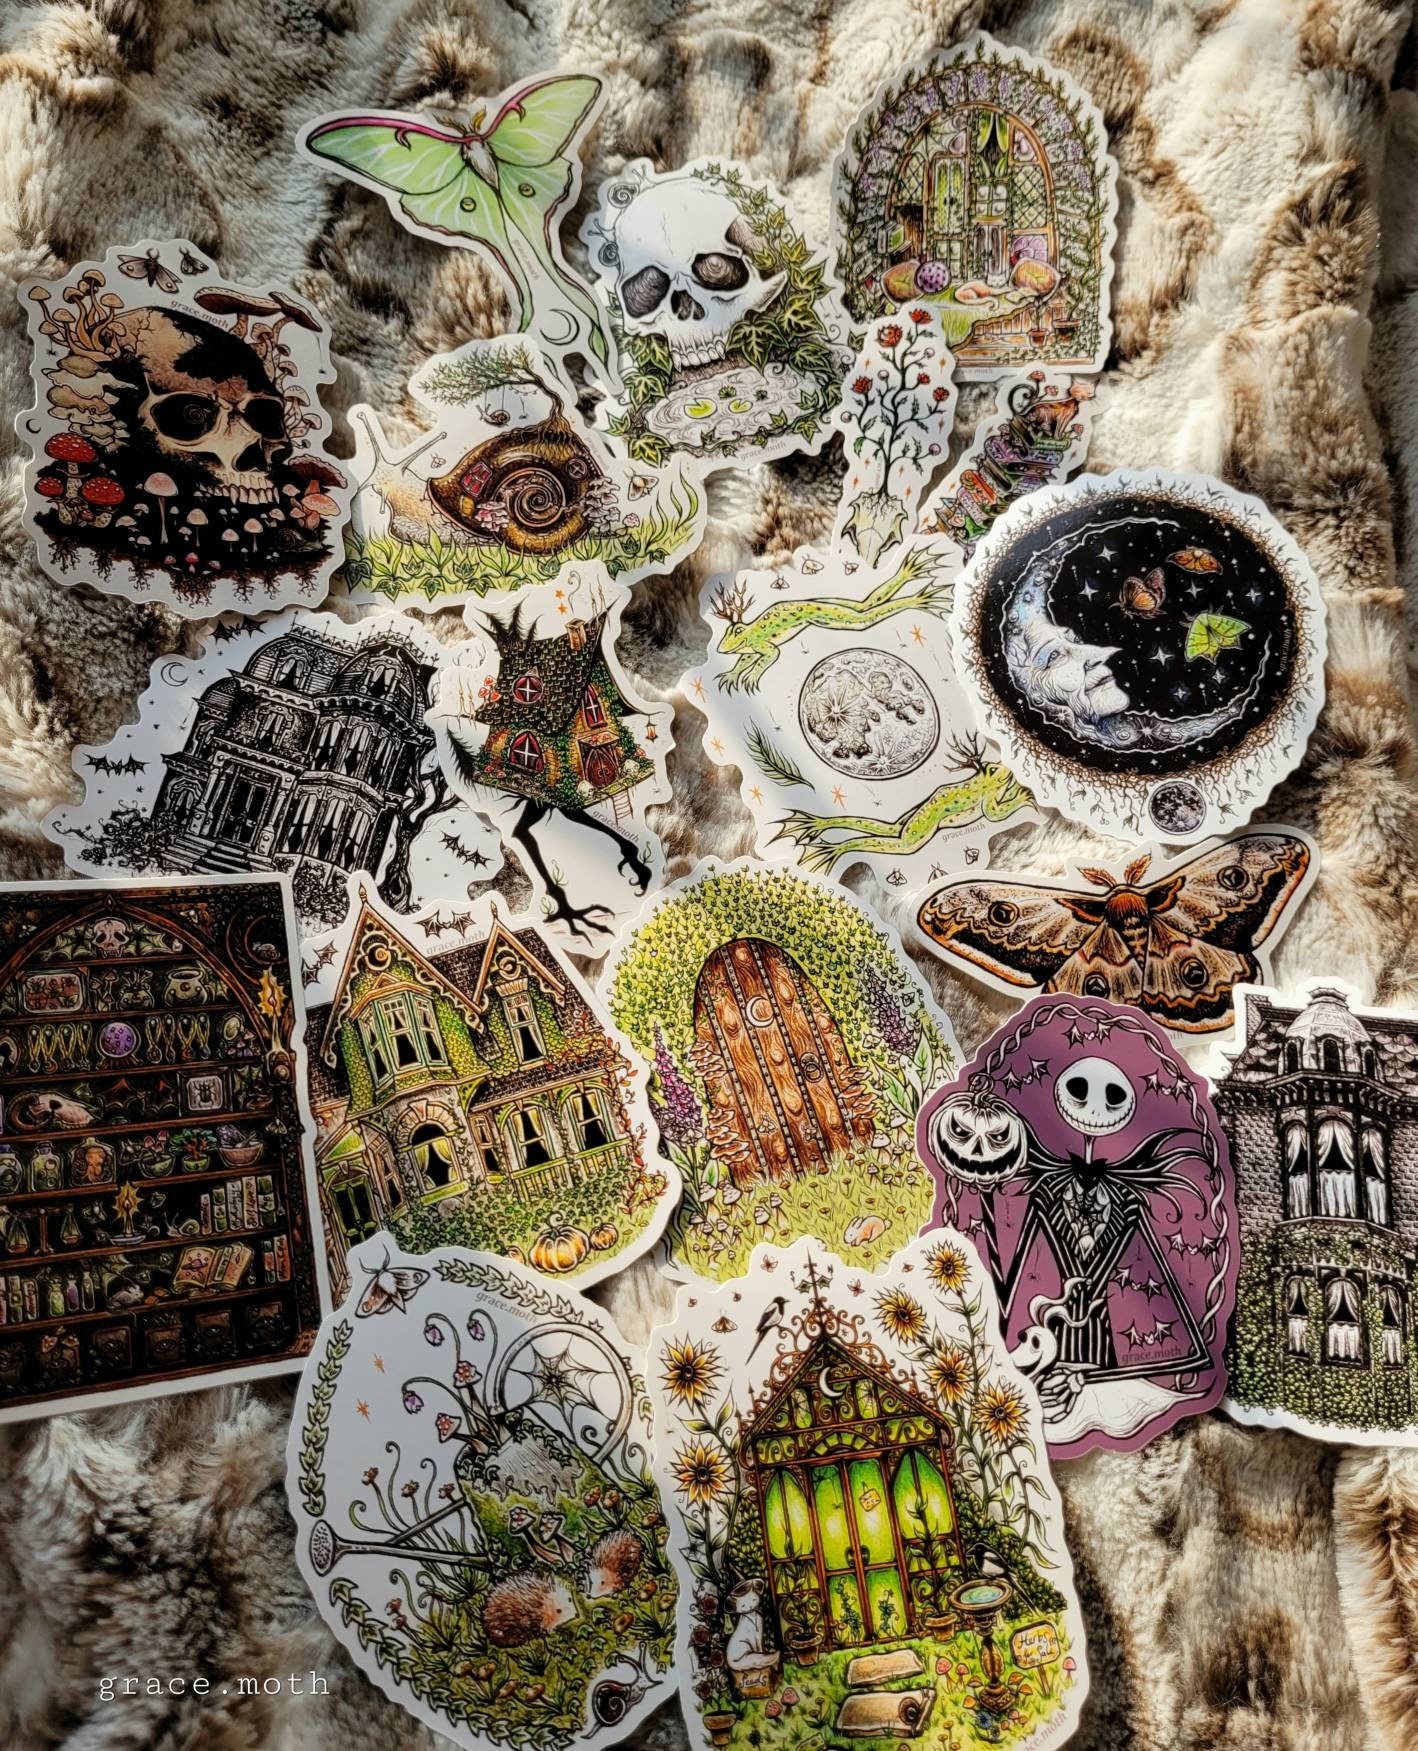 Cottagecore set 1 - Vinyl Sticker Bundle 10cm - Illustrated by Grace moth. Magic, luna moth, green witch, snail house, moss, fantasy